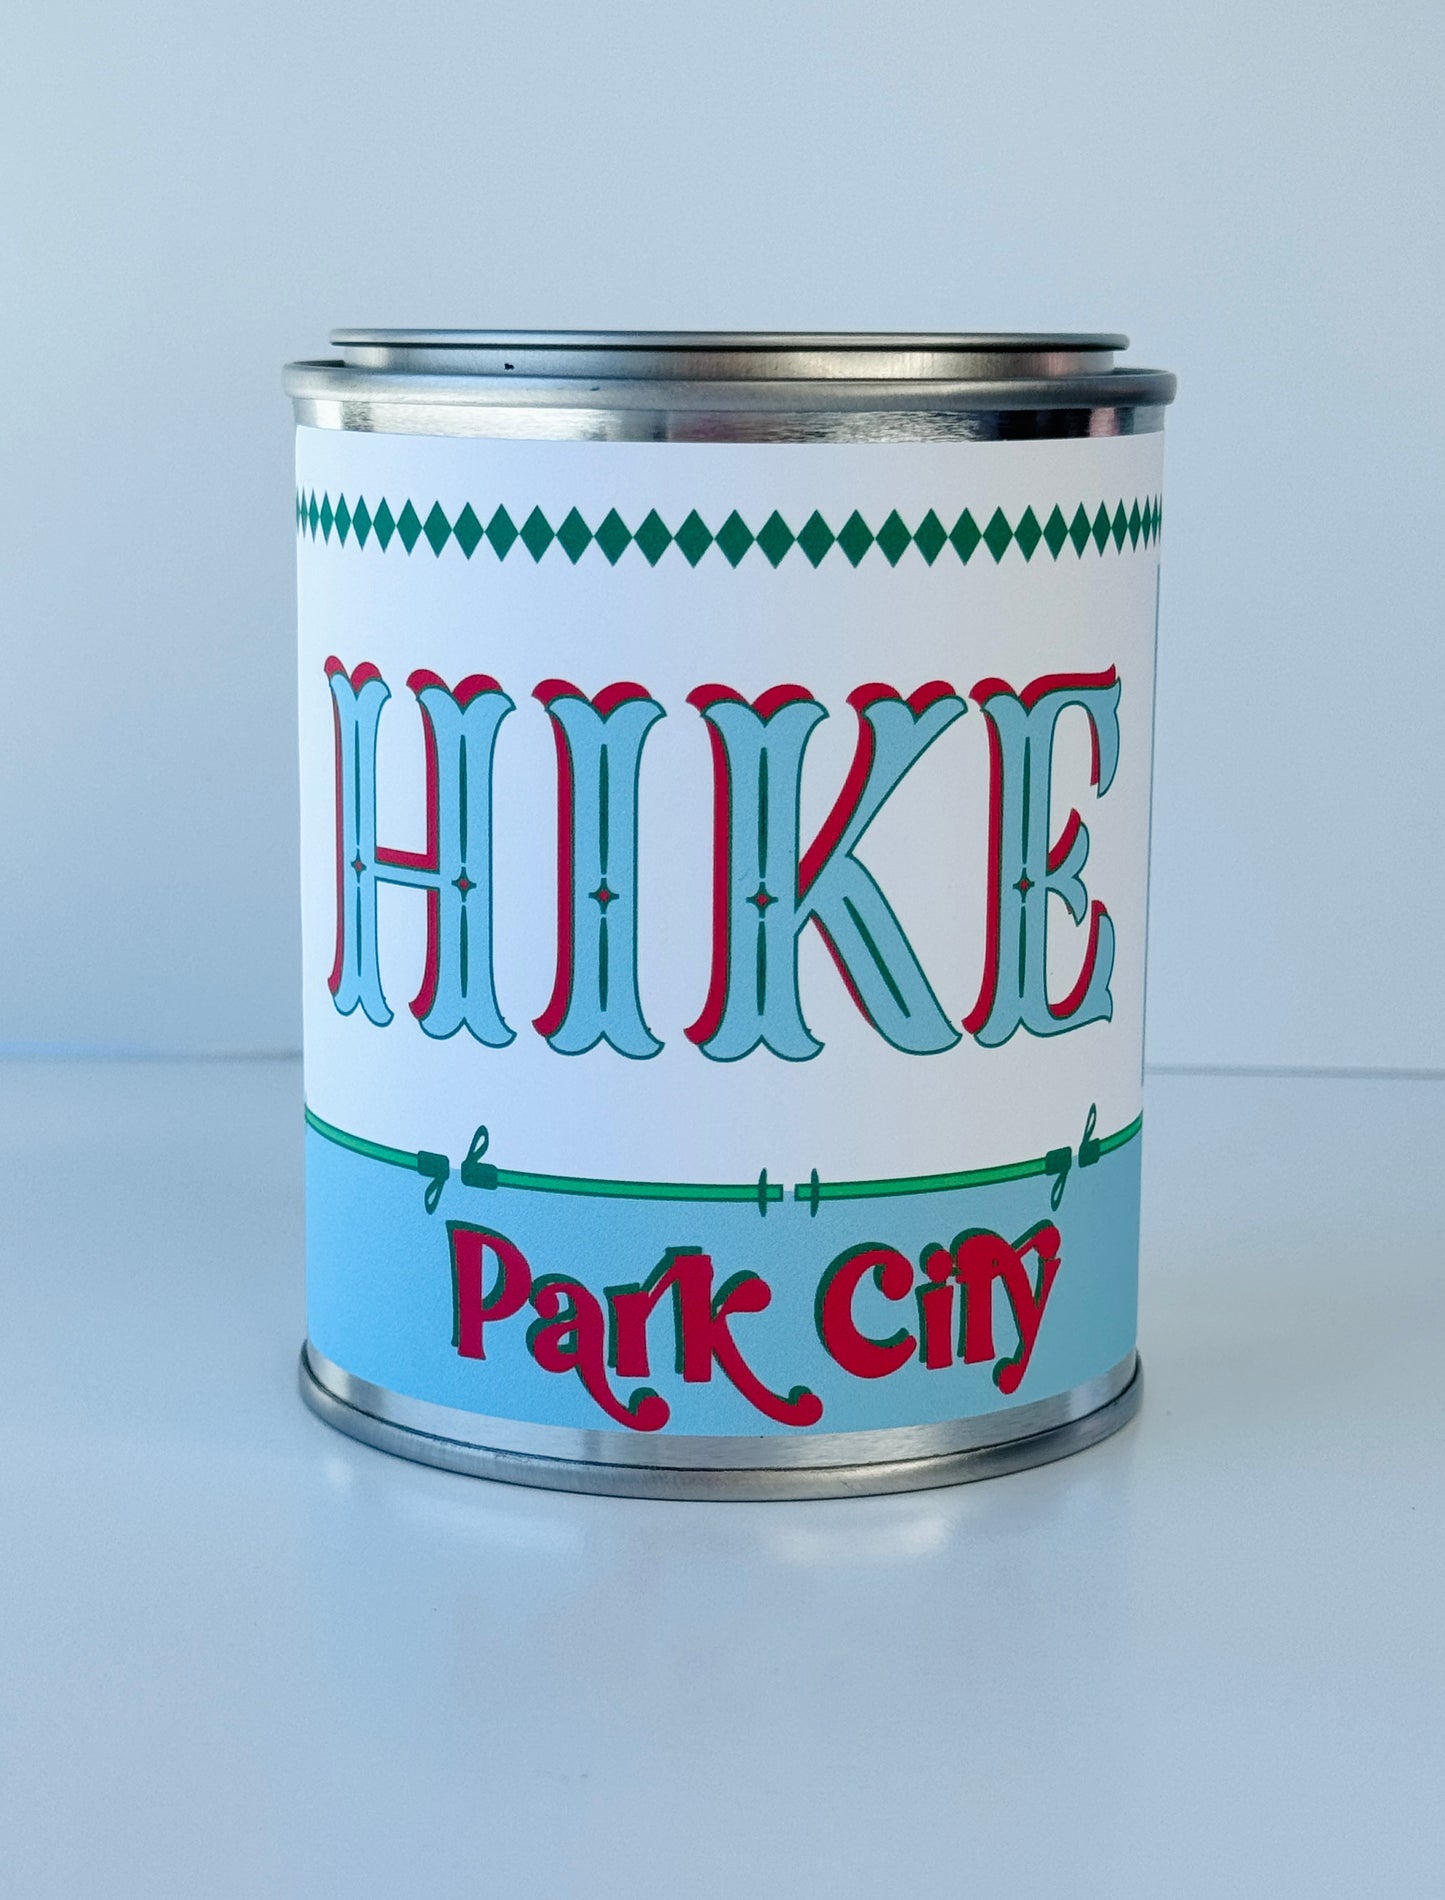 Hike Park City - Paint Tin Candle